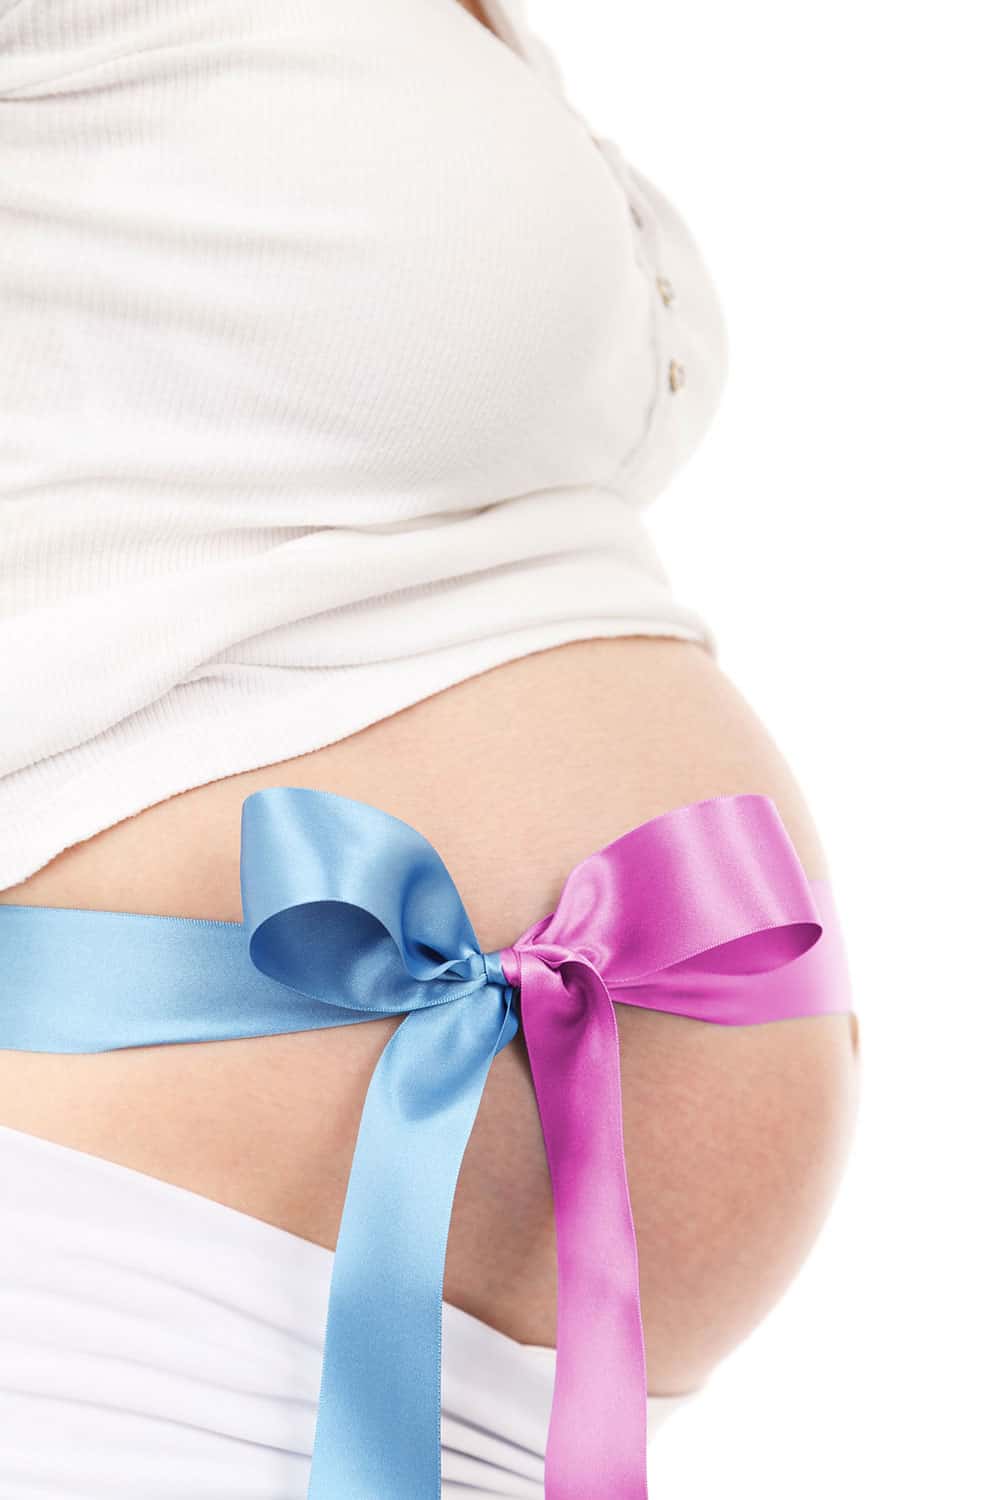 Pre-Conception Reflexology Pregnancy Fertility Ovulation Relaxation Infertility Stress Ovulation Nurture IVF Hormones Balance